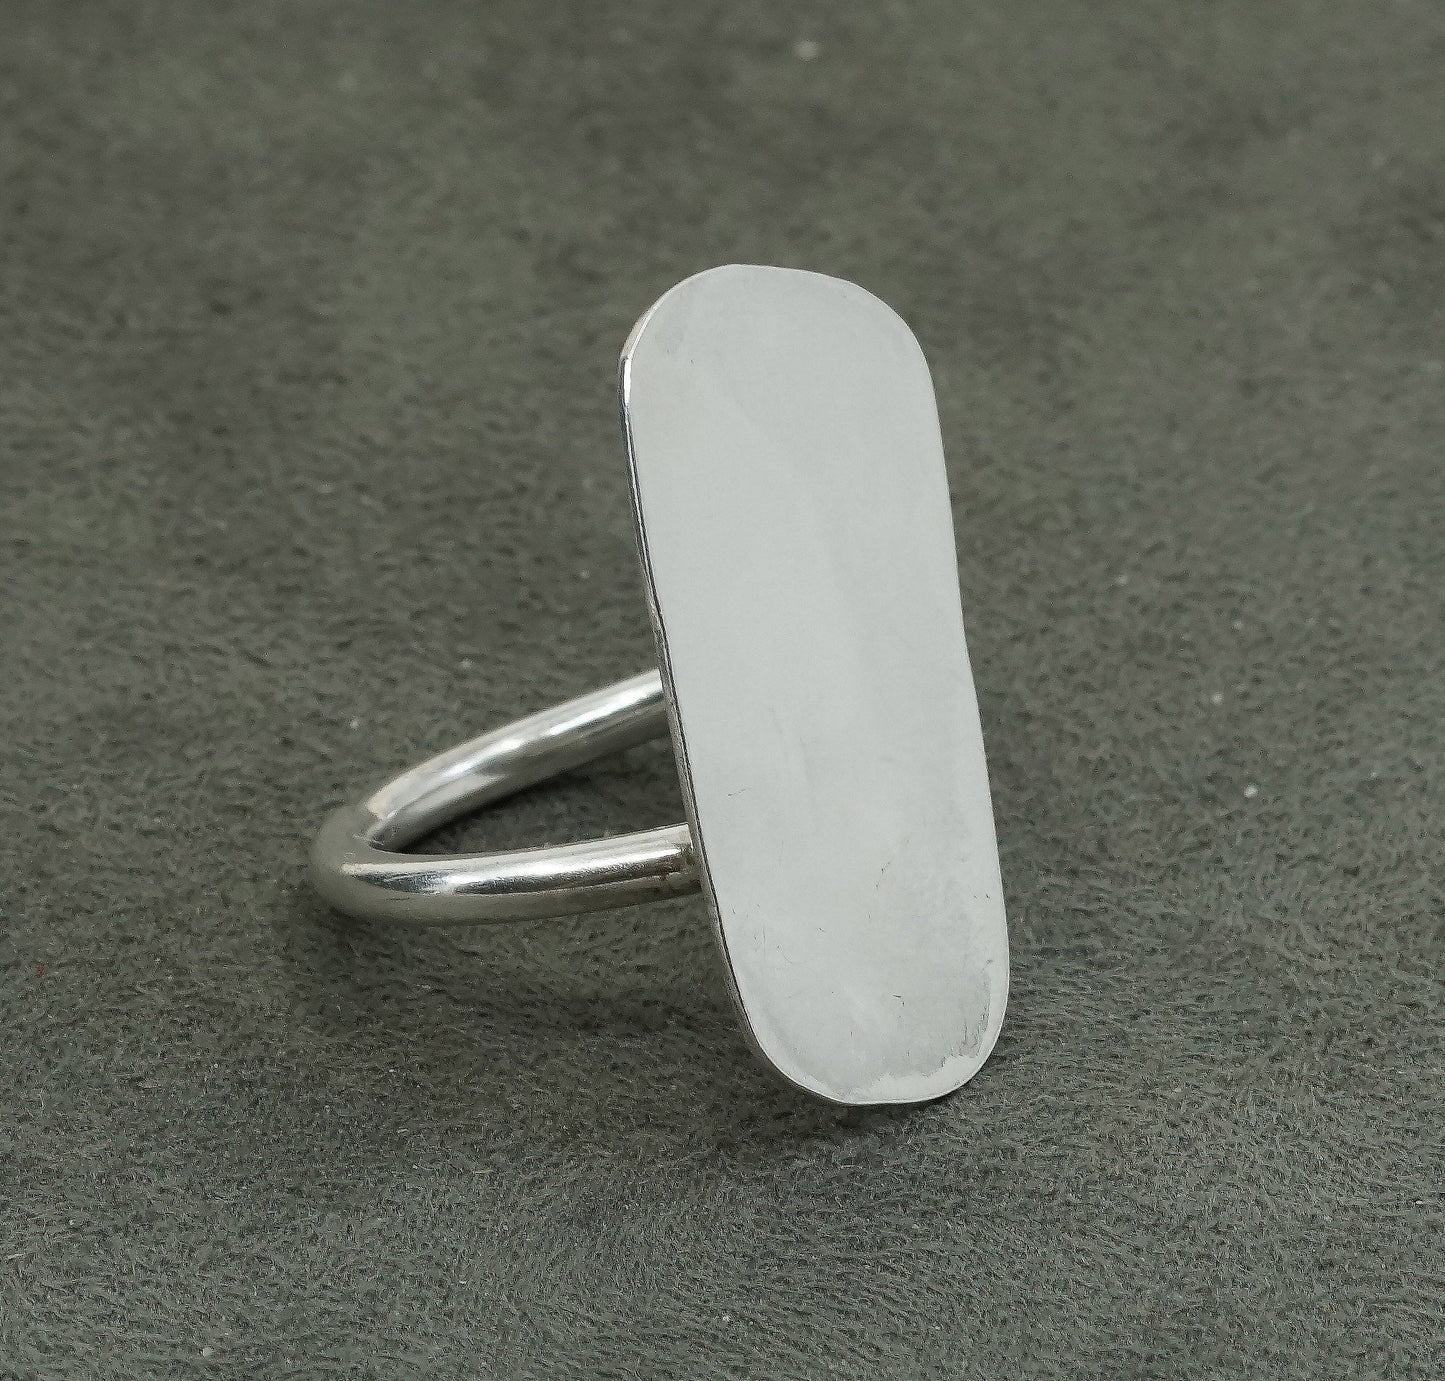 Size 8, vtg Sterling silver handmade ring, 925 blank tag band, minimalist